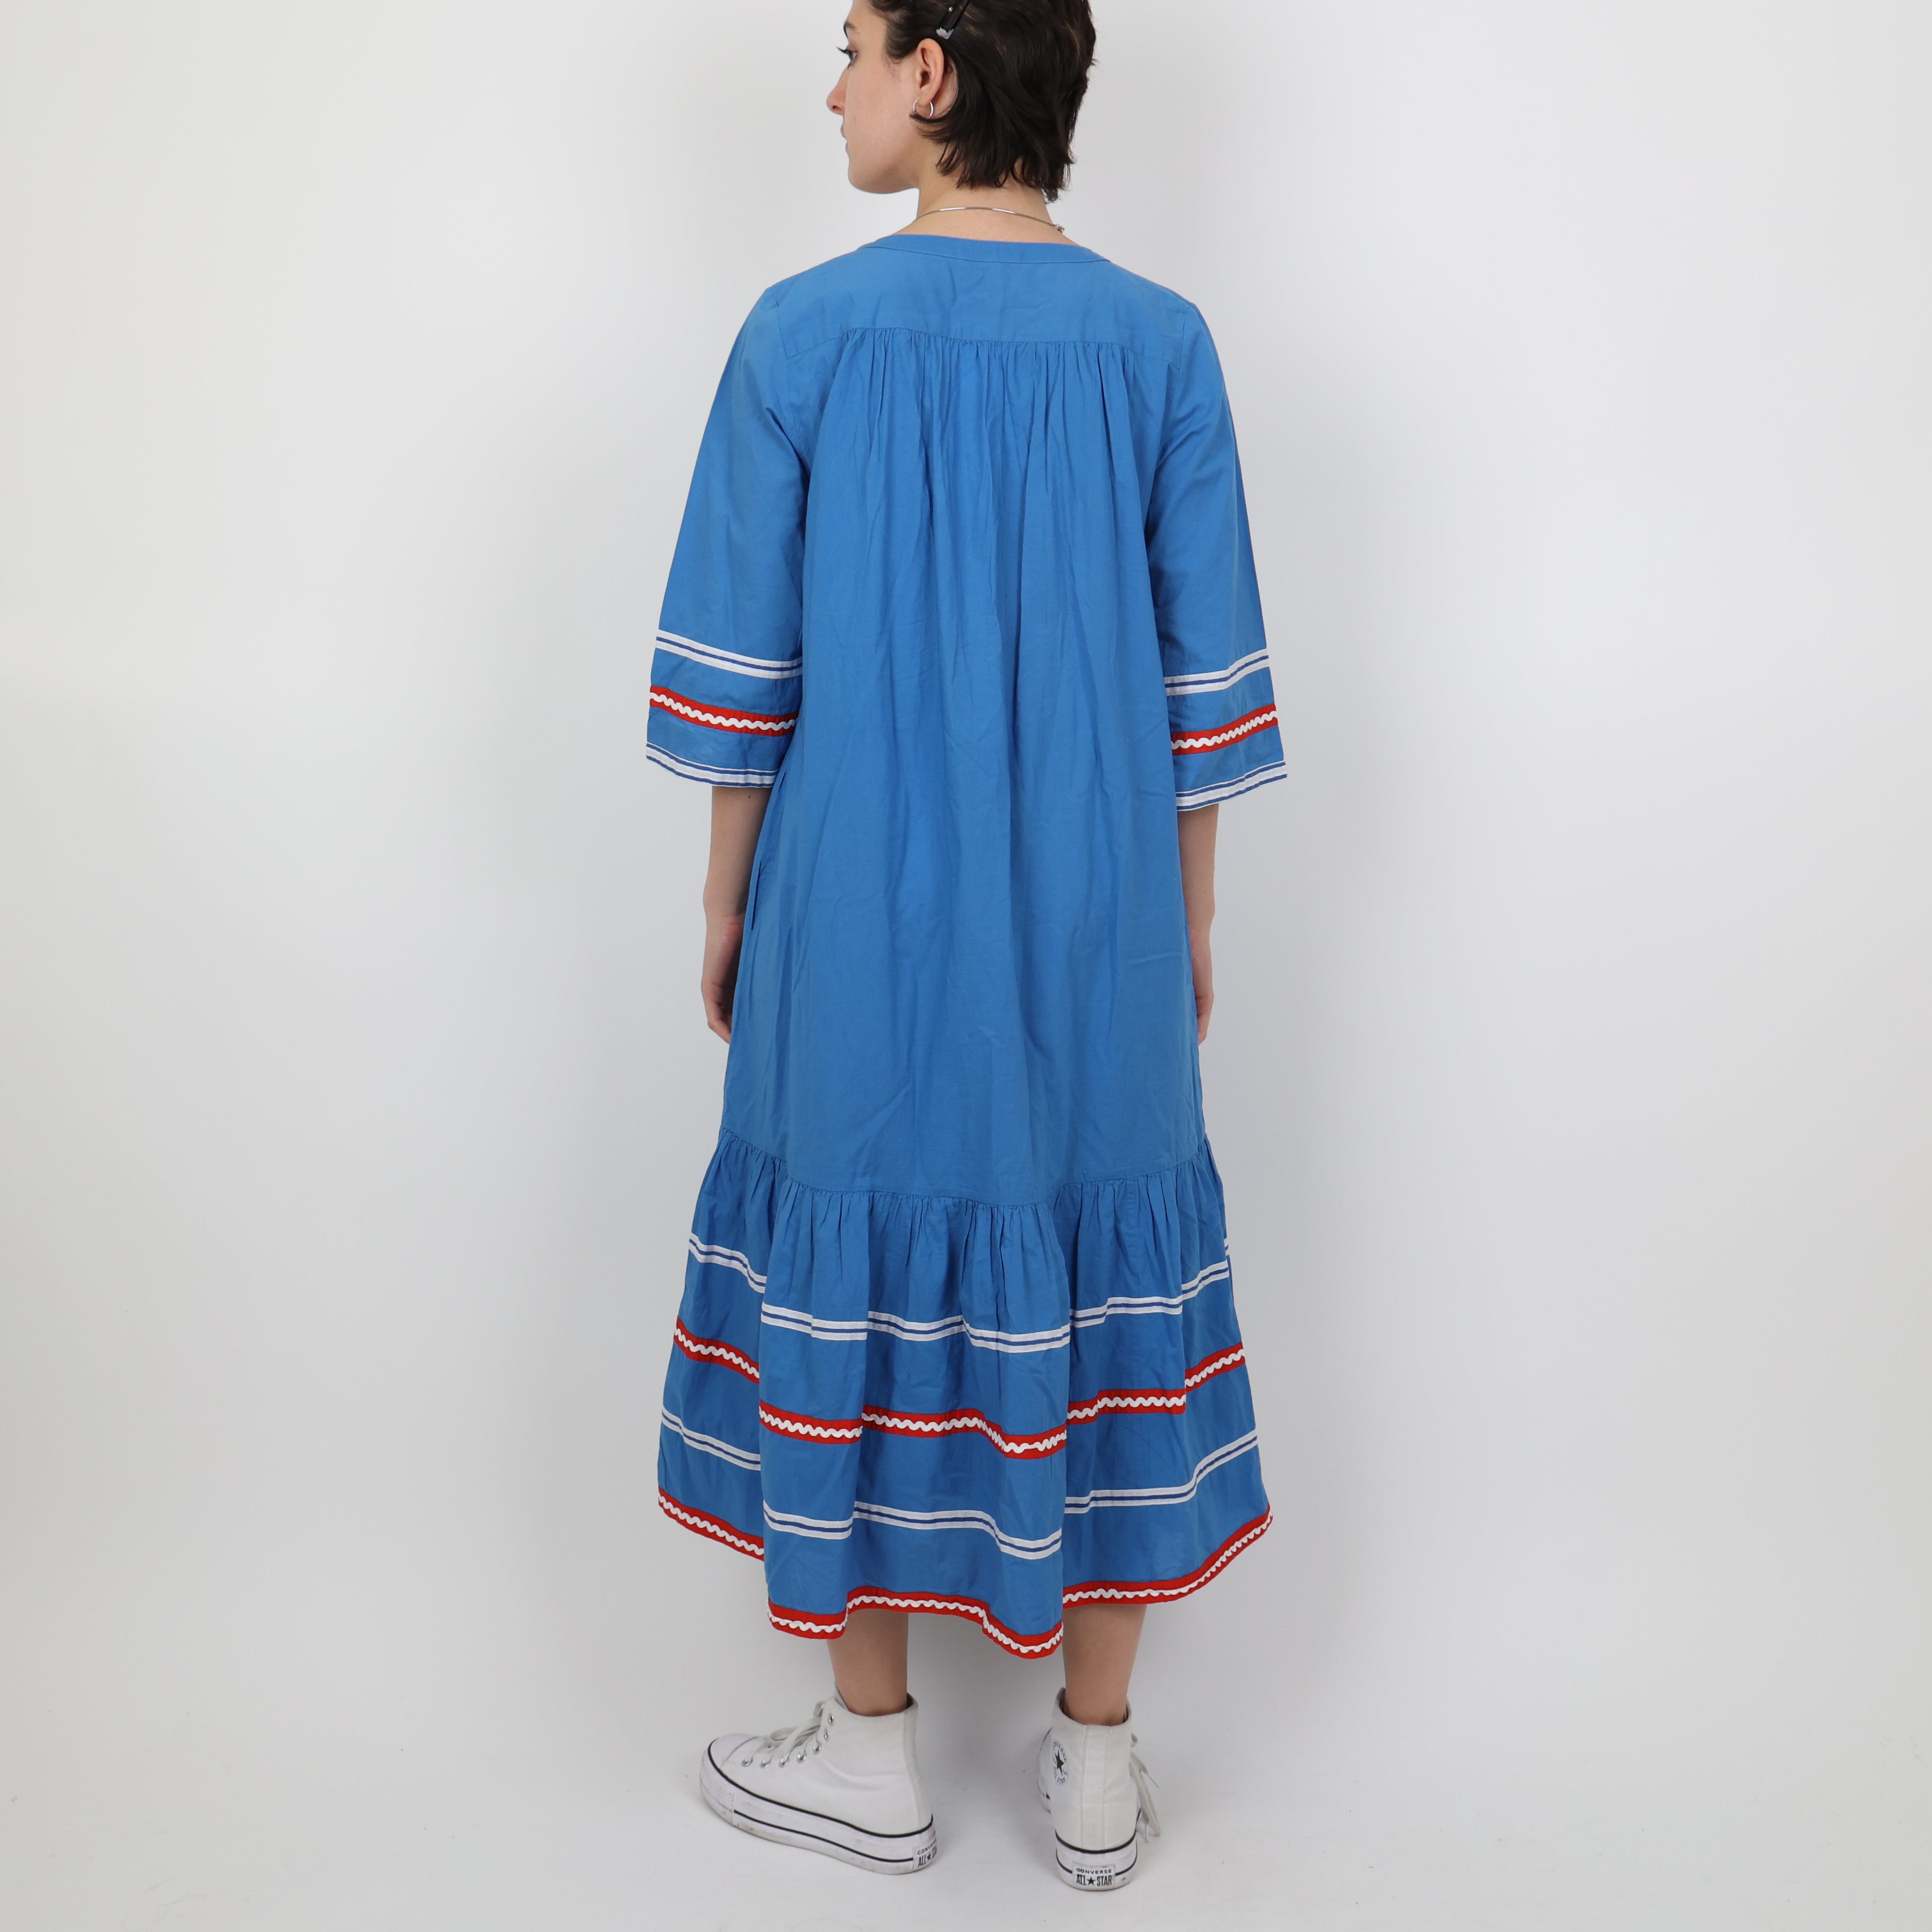 Dress, UK Size 12